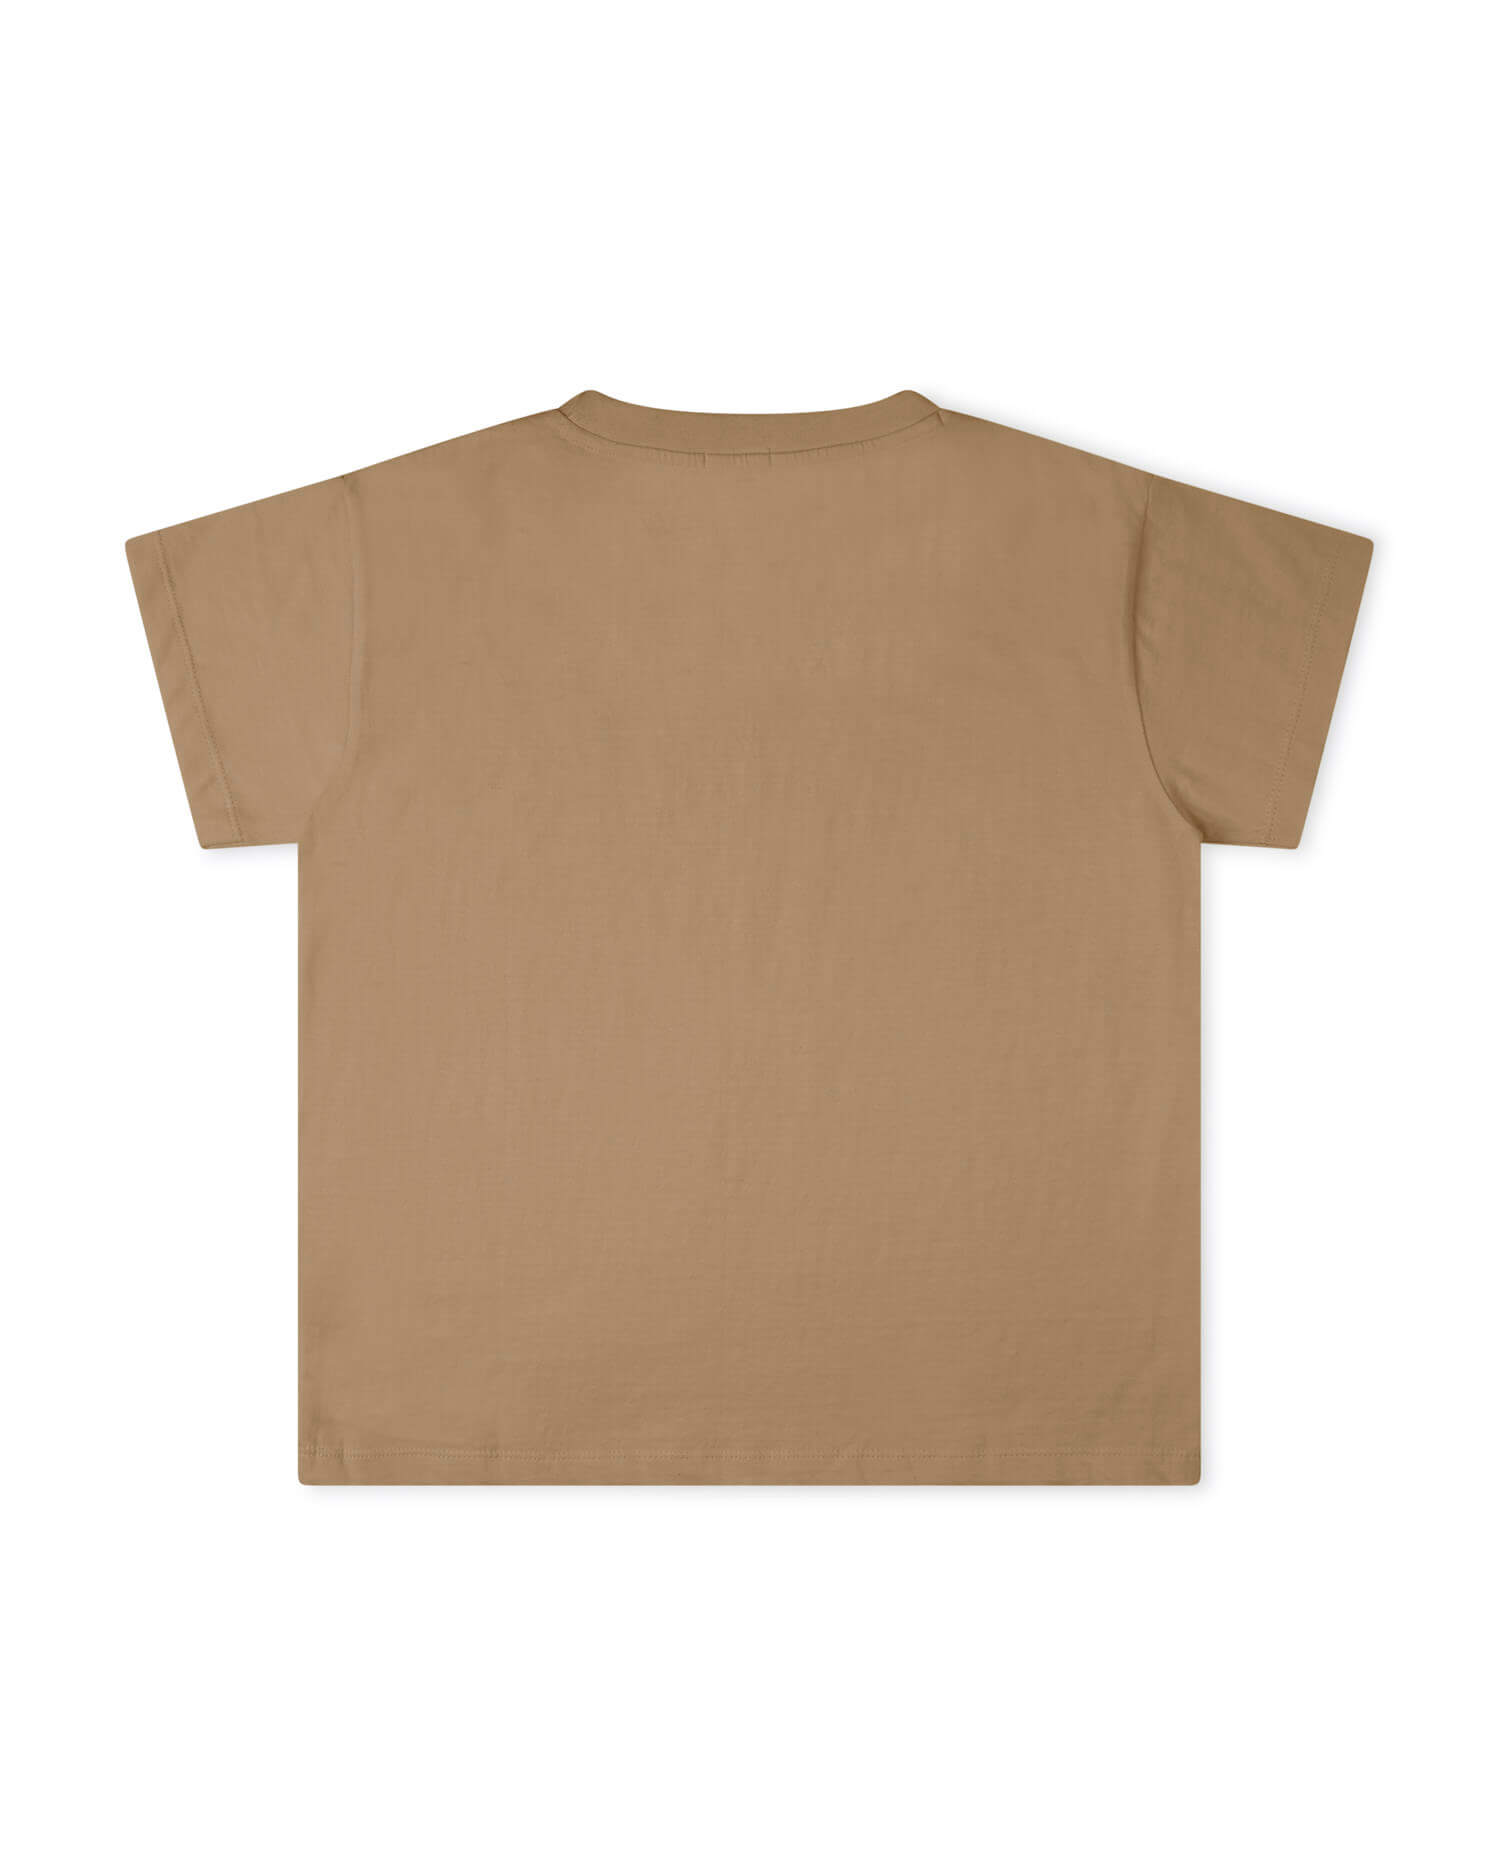 T-shirt Essential marron clair en coton 100% biologique de Matona